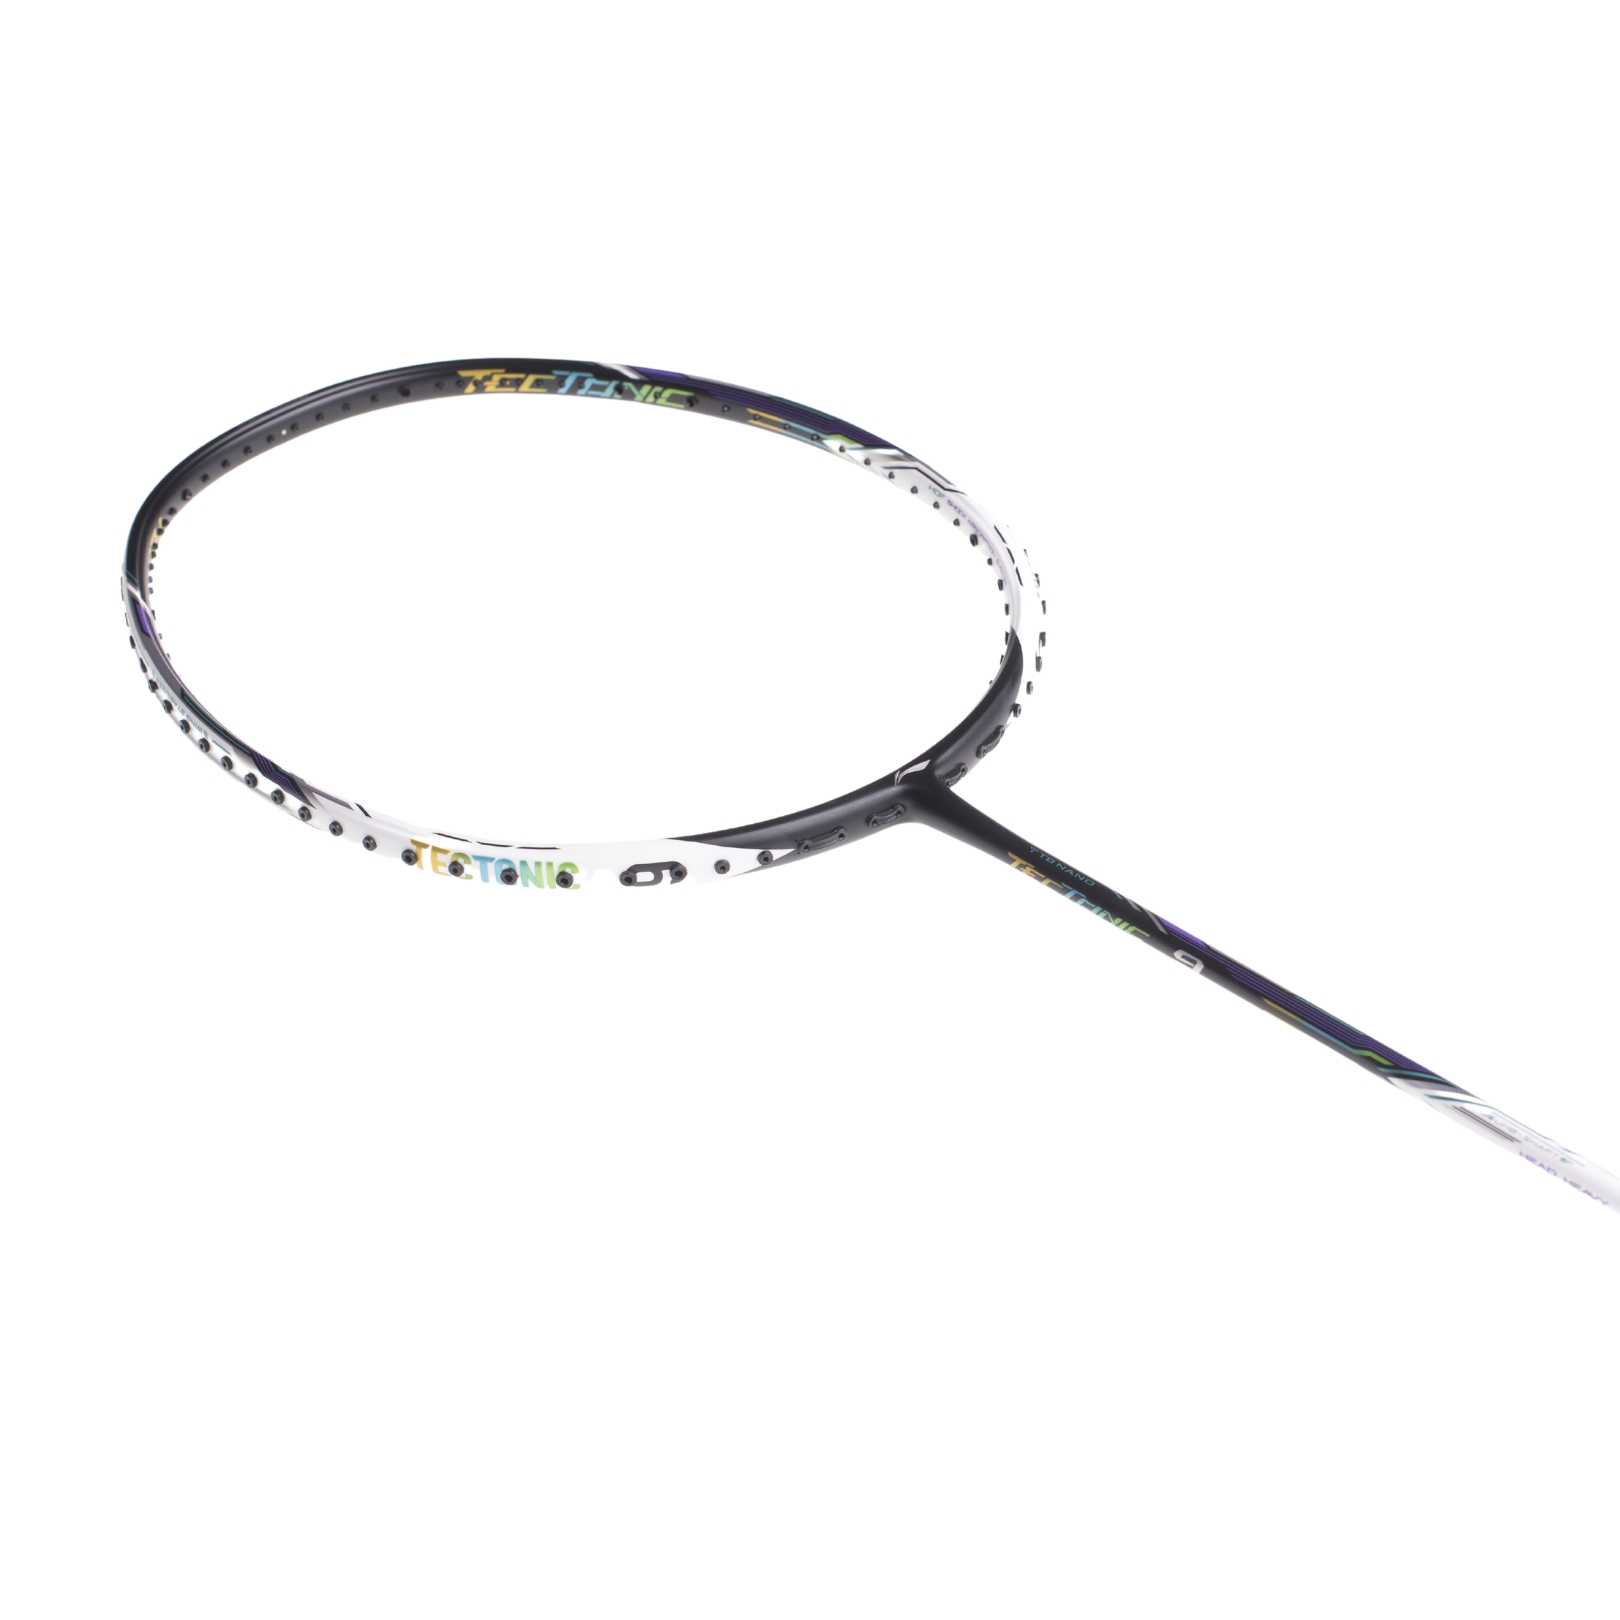 Li-Ning Tectonic 9 | Superior Power Badminton Racket!